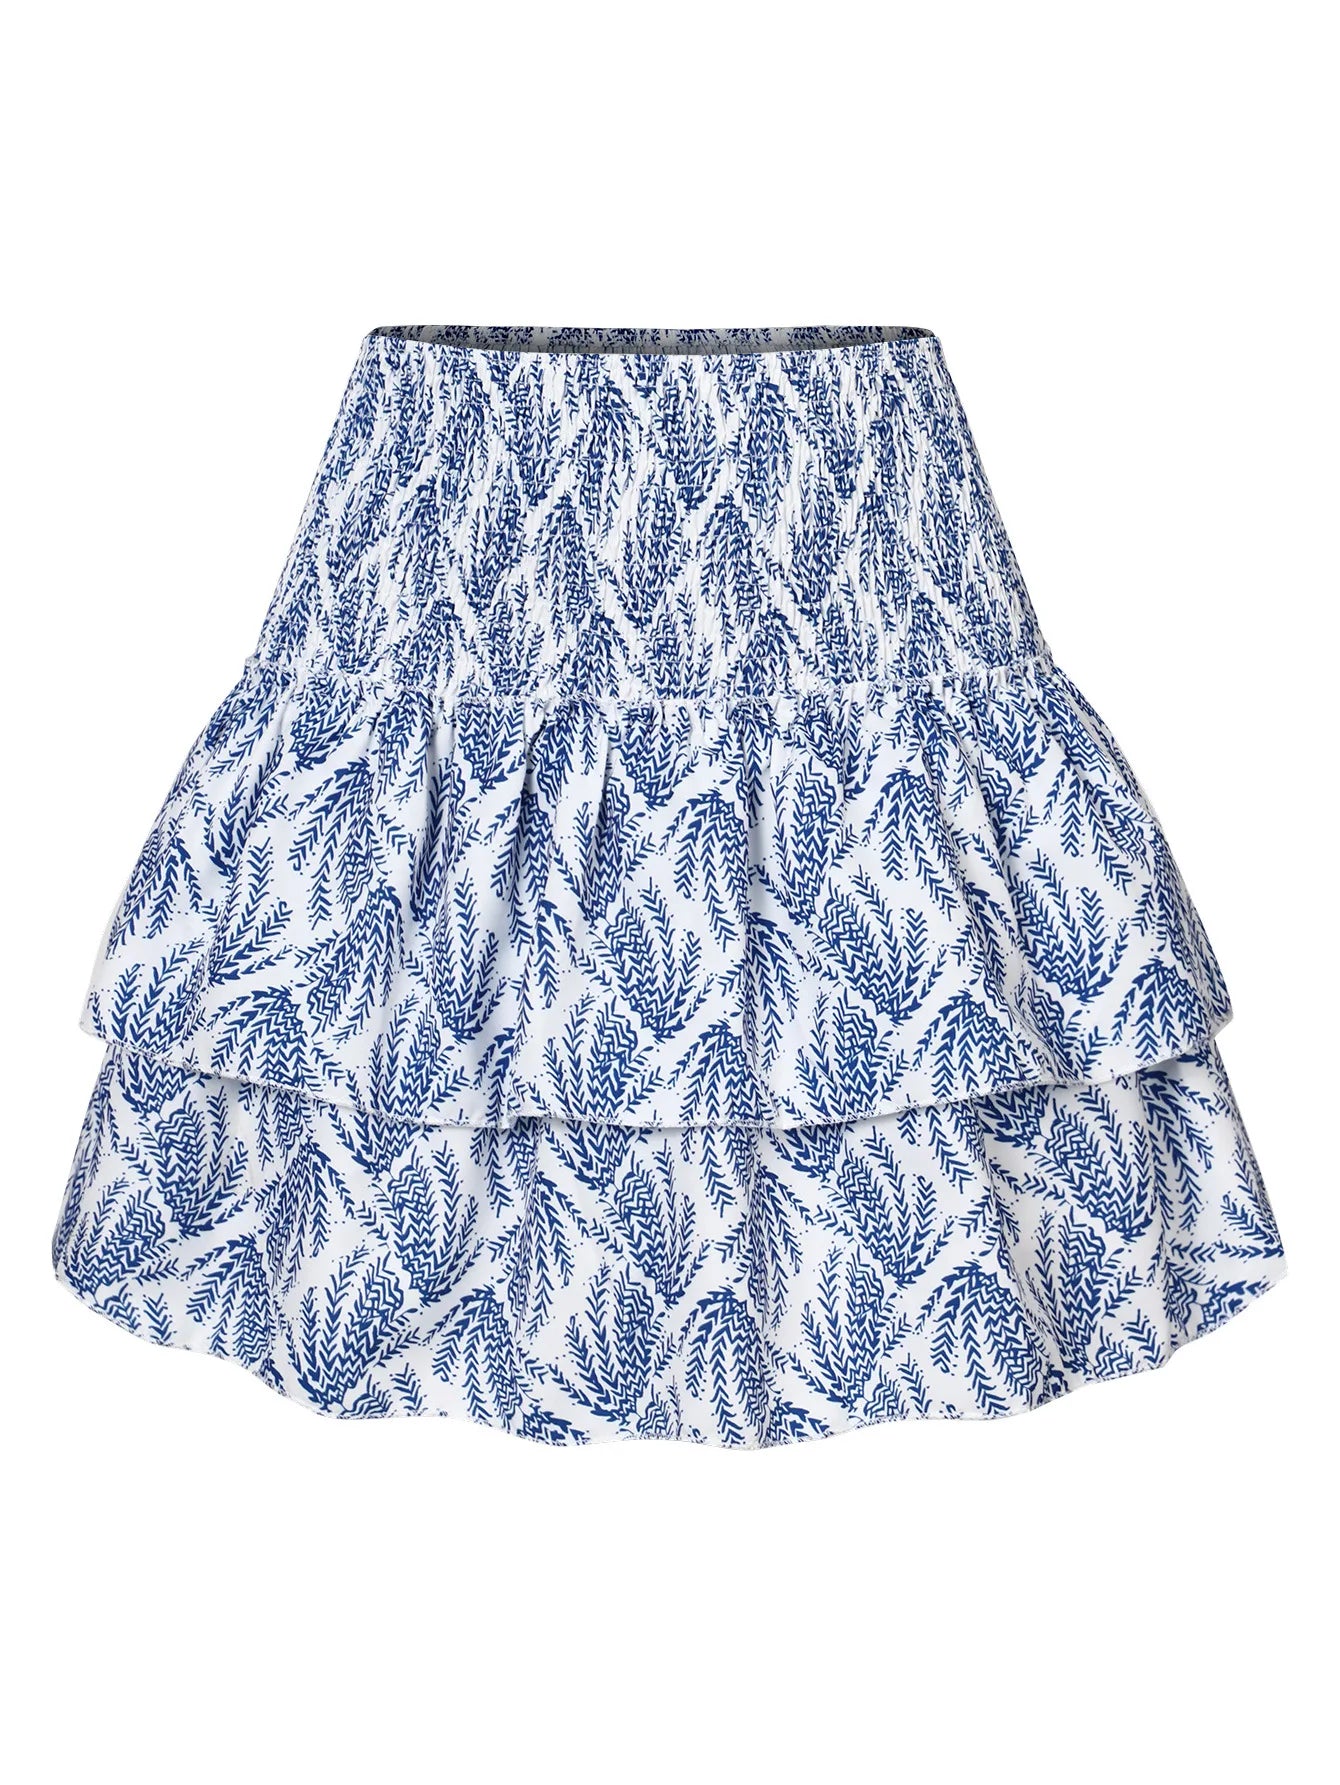 Mini Skirts- Express Your Style in Vibrant Layered Mini Skirt- - Pekosa Women Fashion